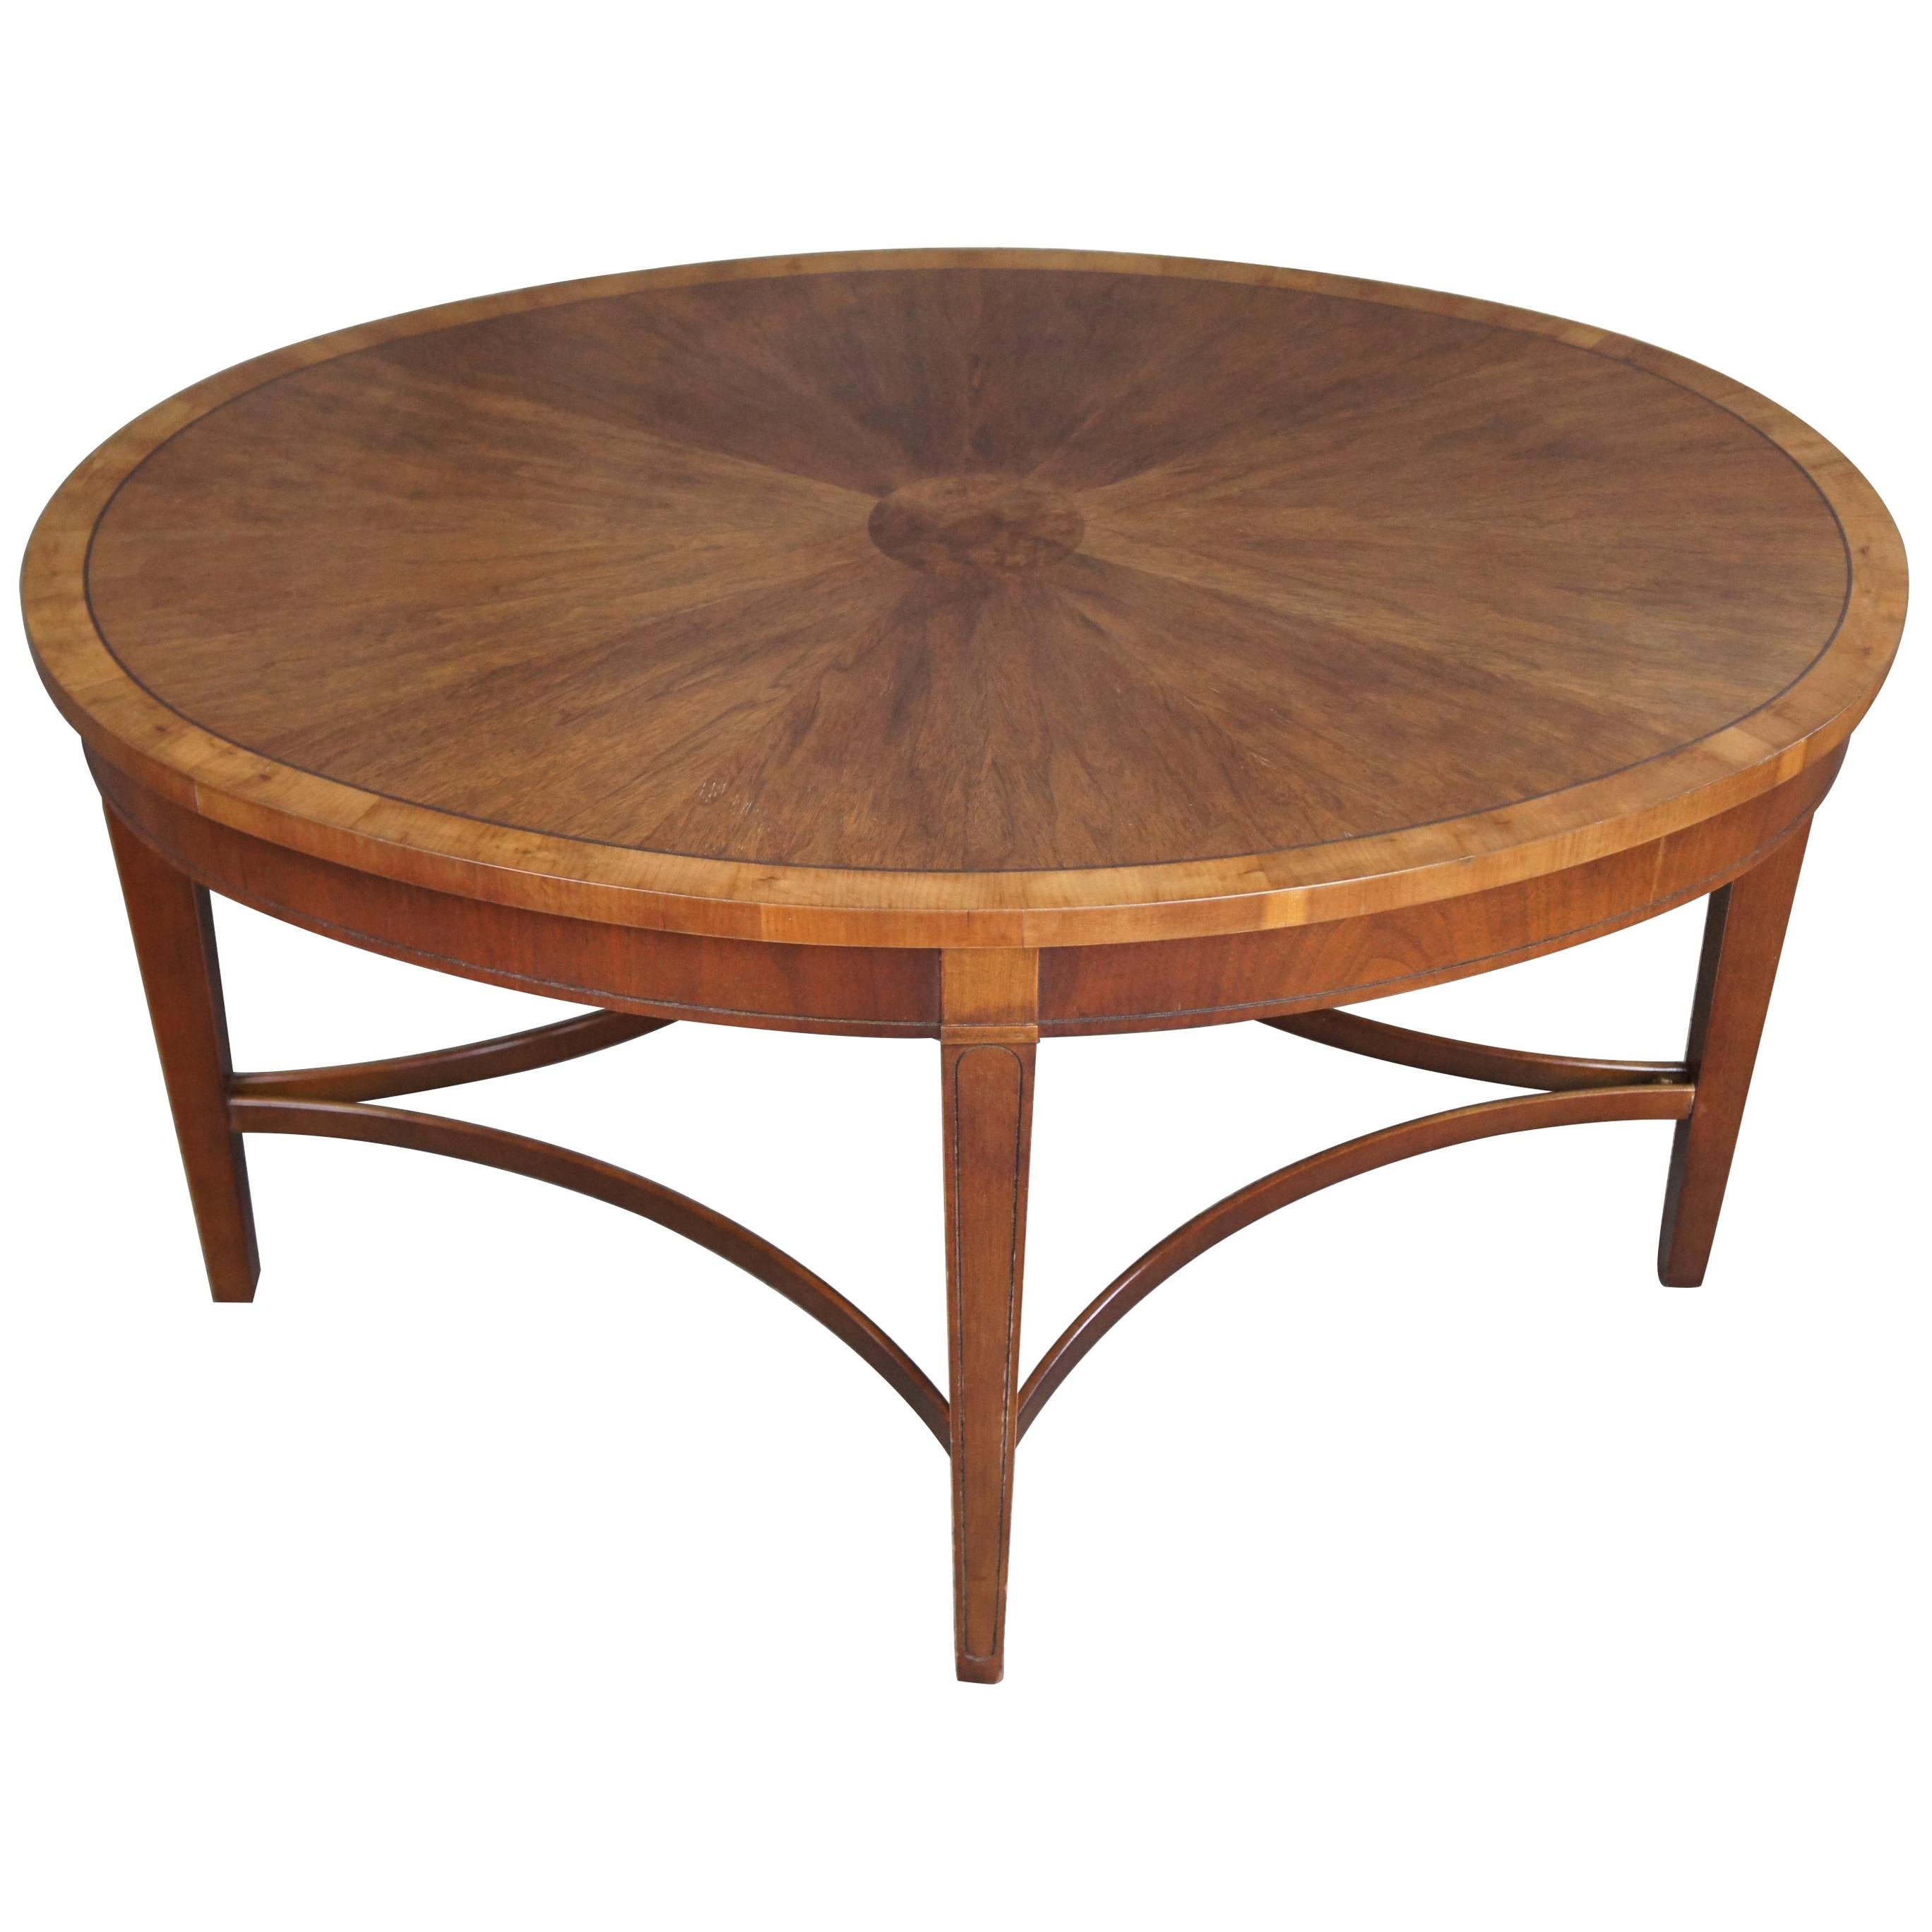 Baker Furniture Laura Ashley Inlaid Mahogany Burl Wood Coffee Table Sheraton